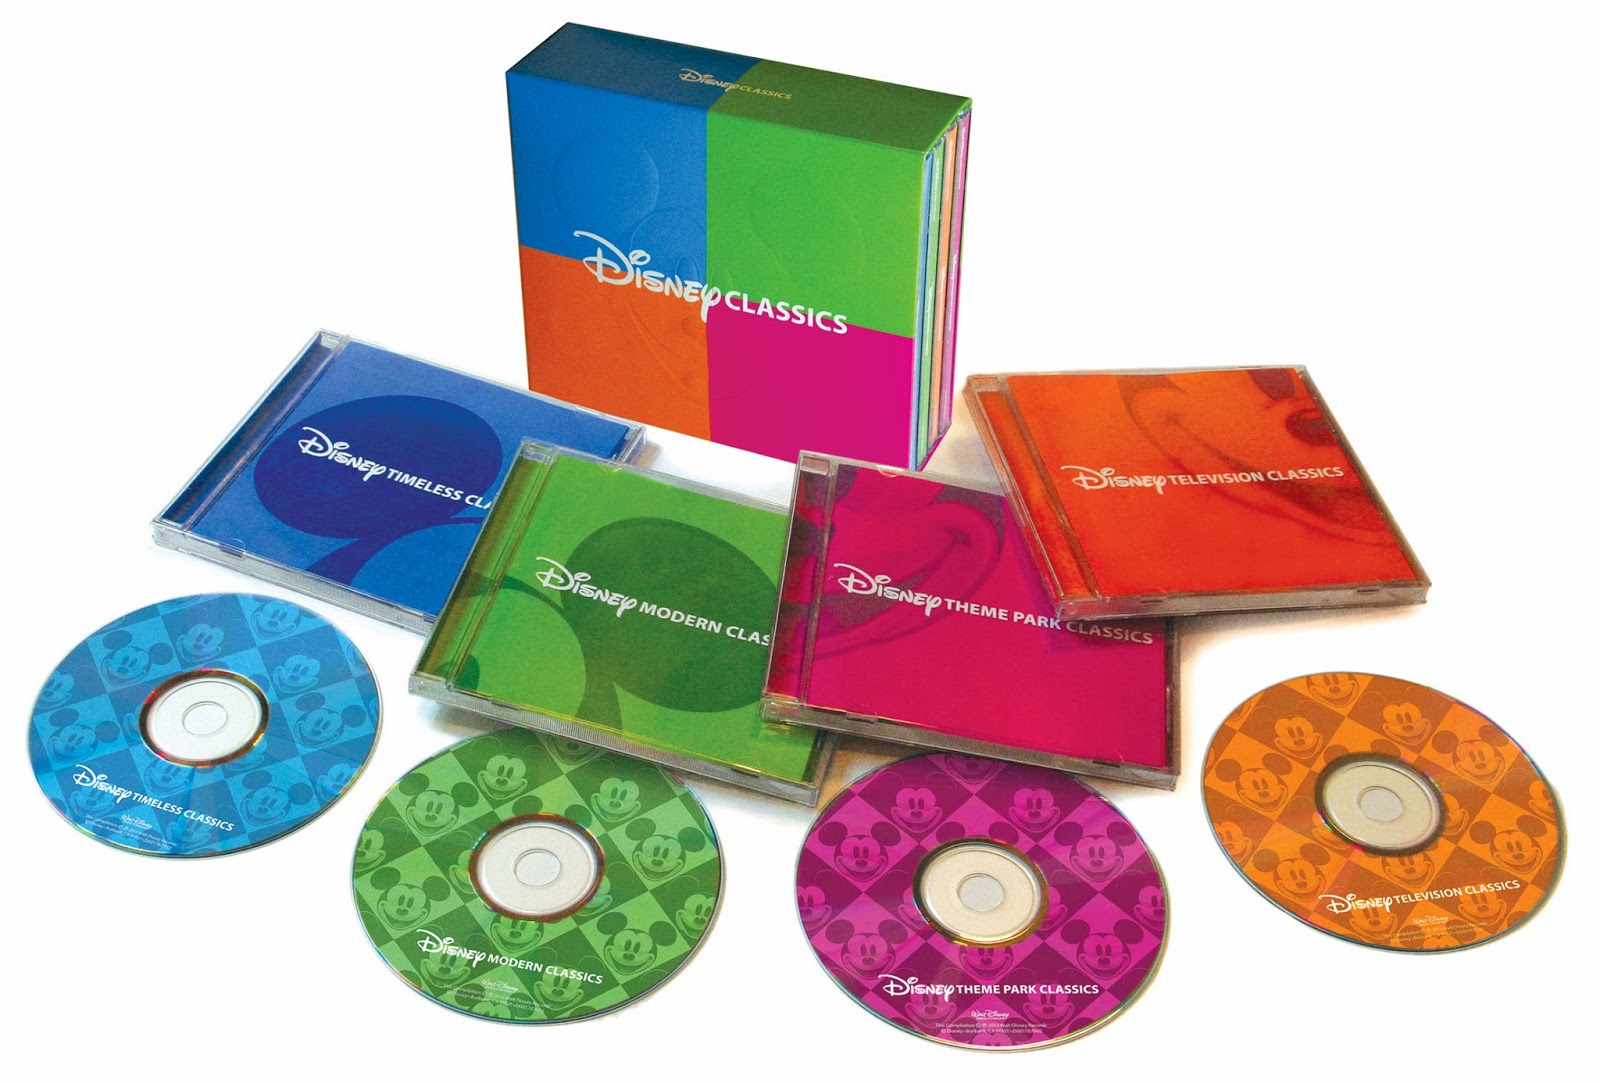 Classics Box Set. Classic Disney Music. Music Box диски. Disney Classics Disc 1: Modern Classics.